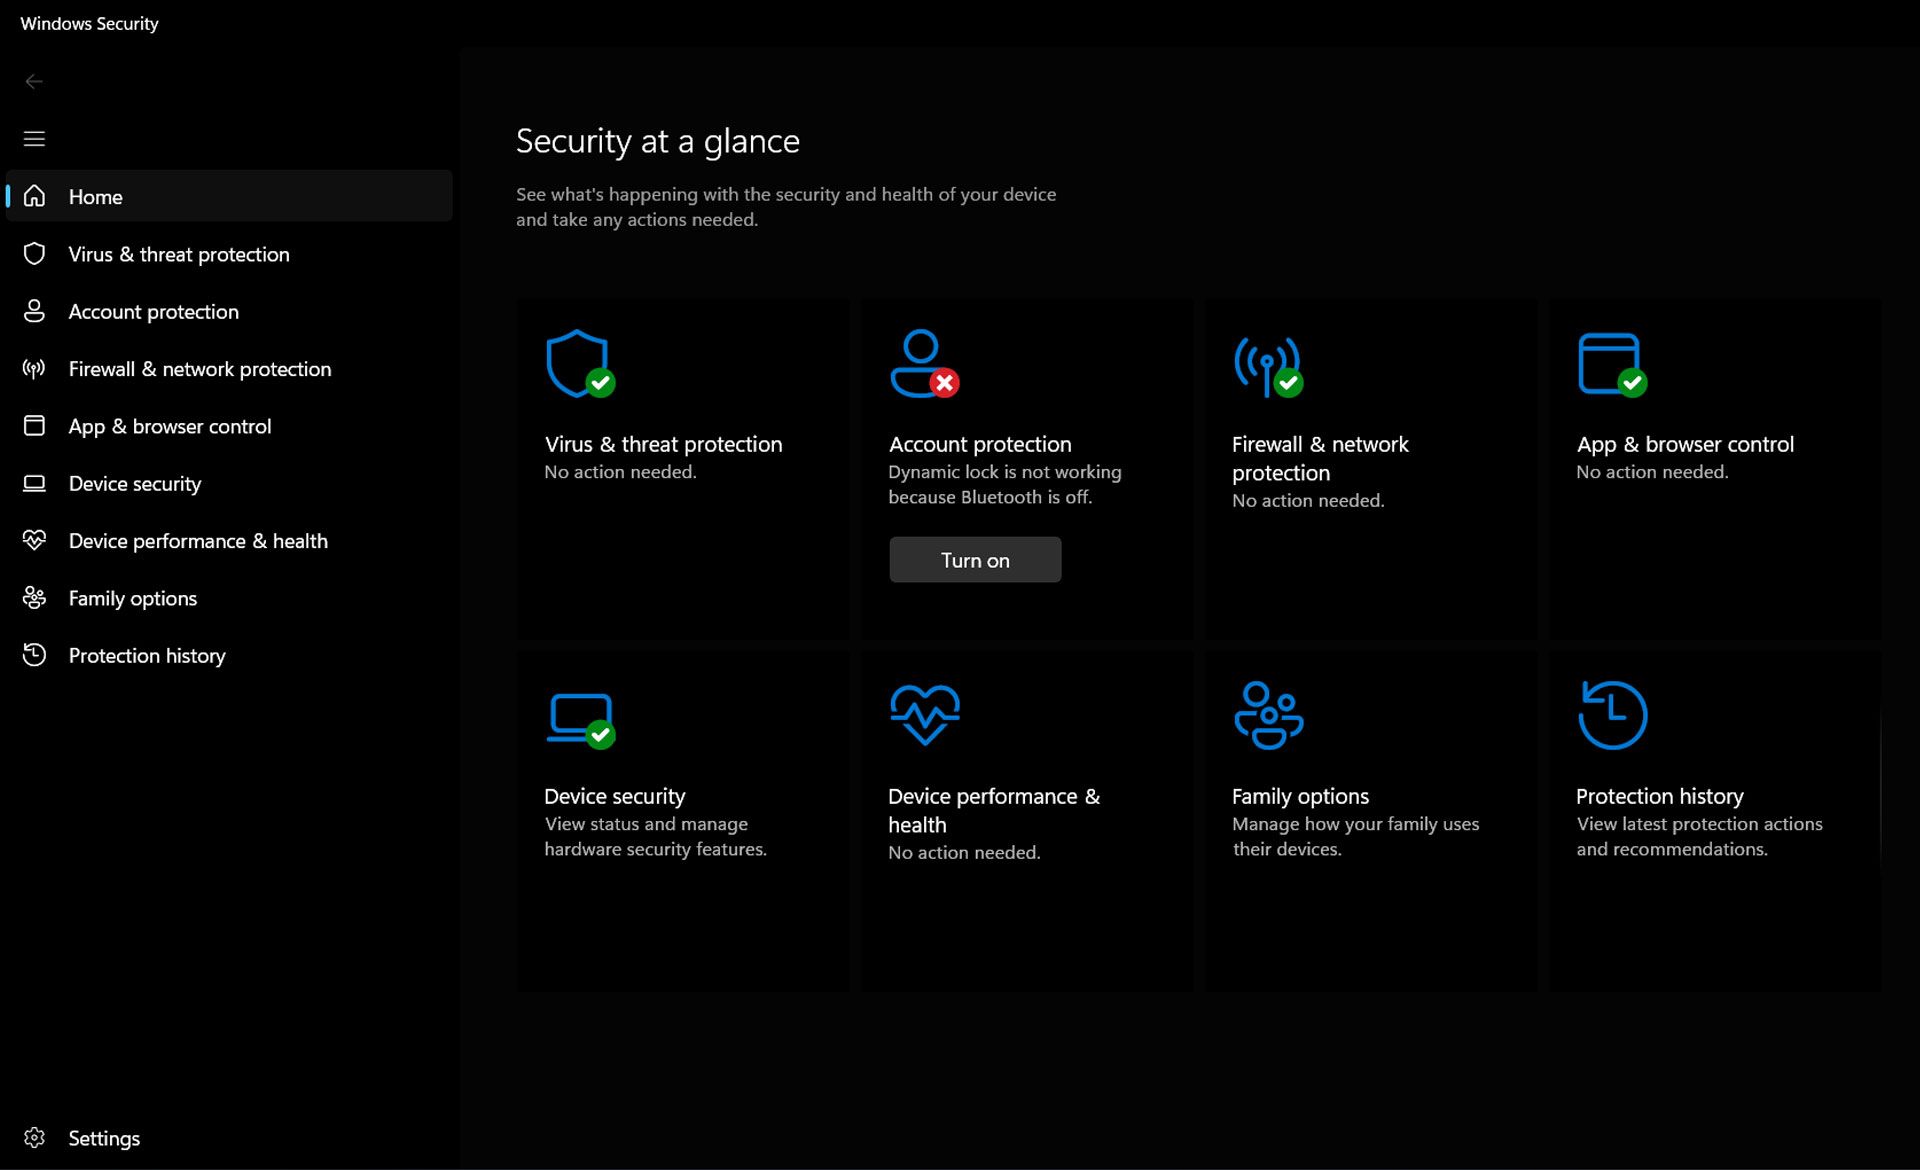 Windows Security settings